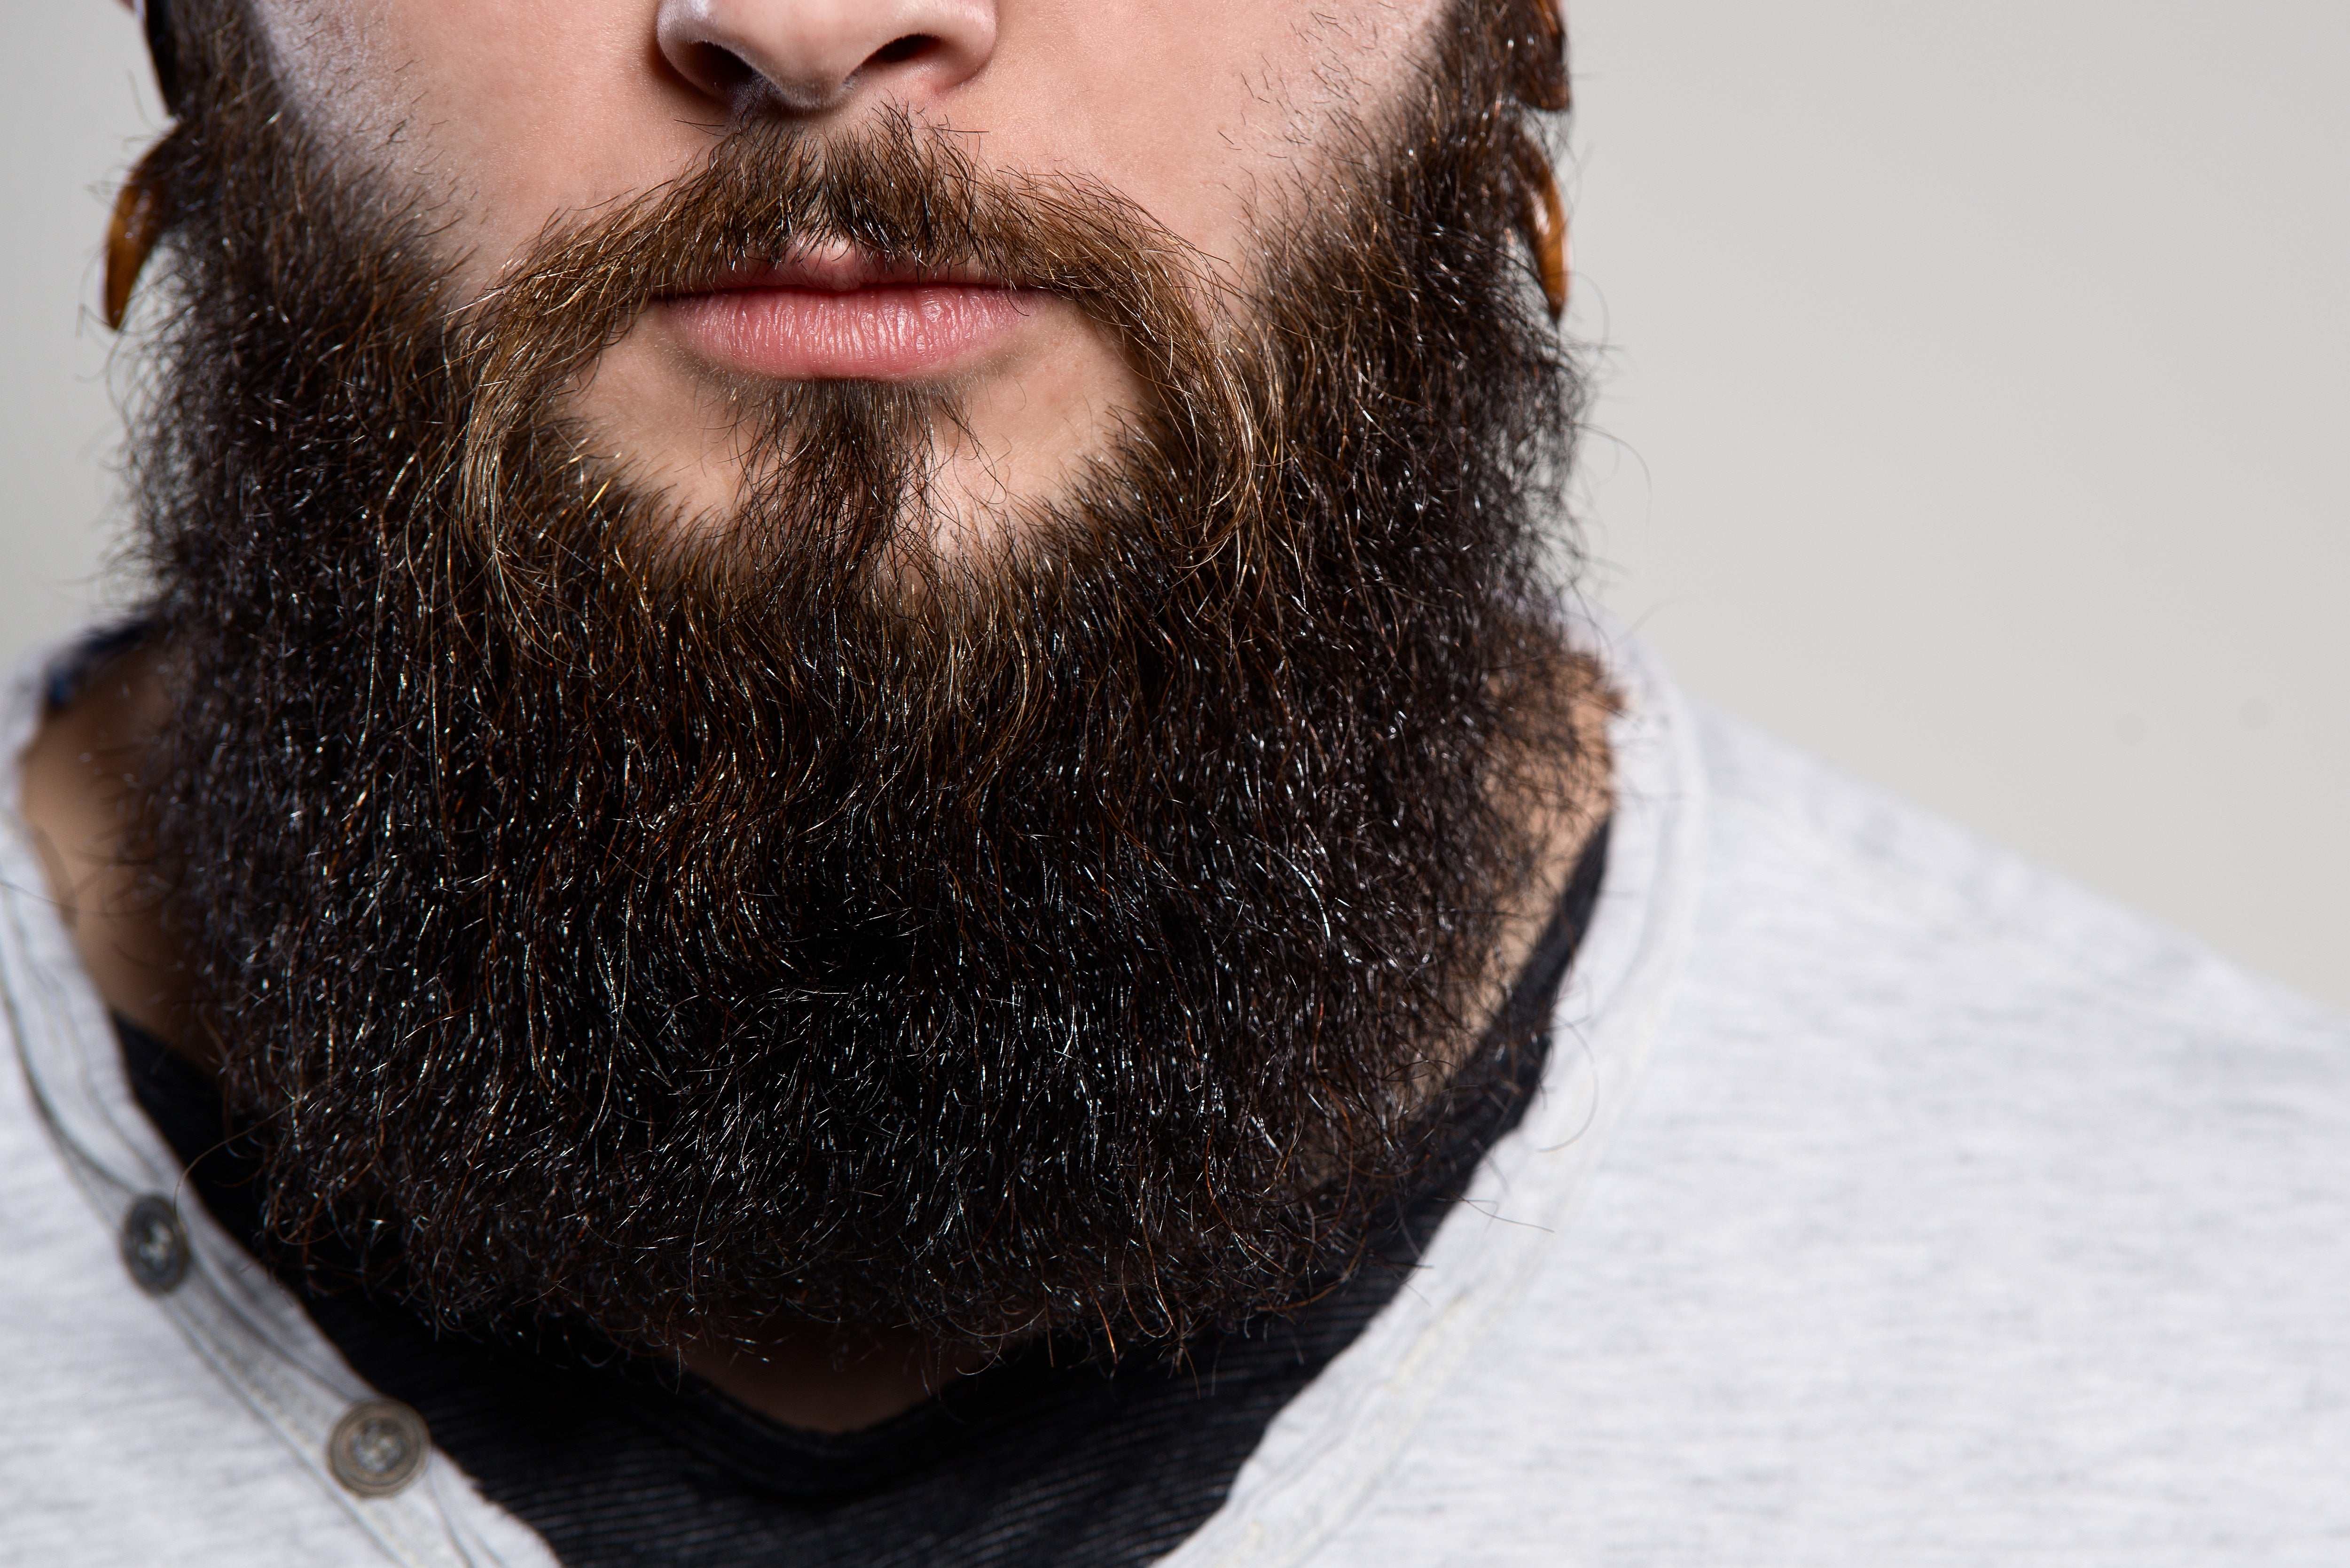 Beard Growth 101: Things Not to Do When Trying to Grow a Beard | Bossman  Blog